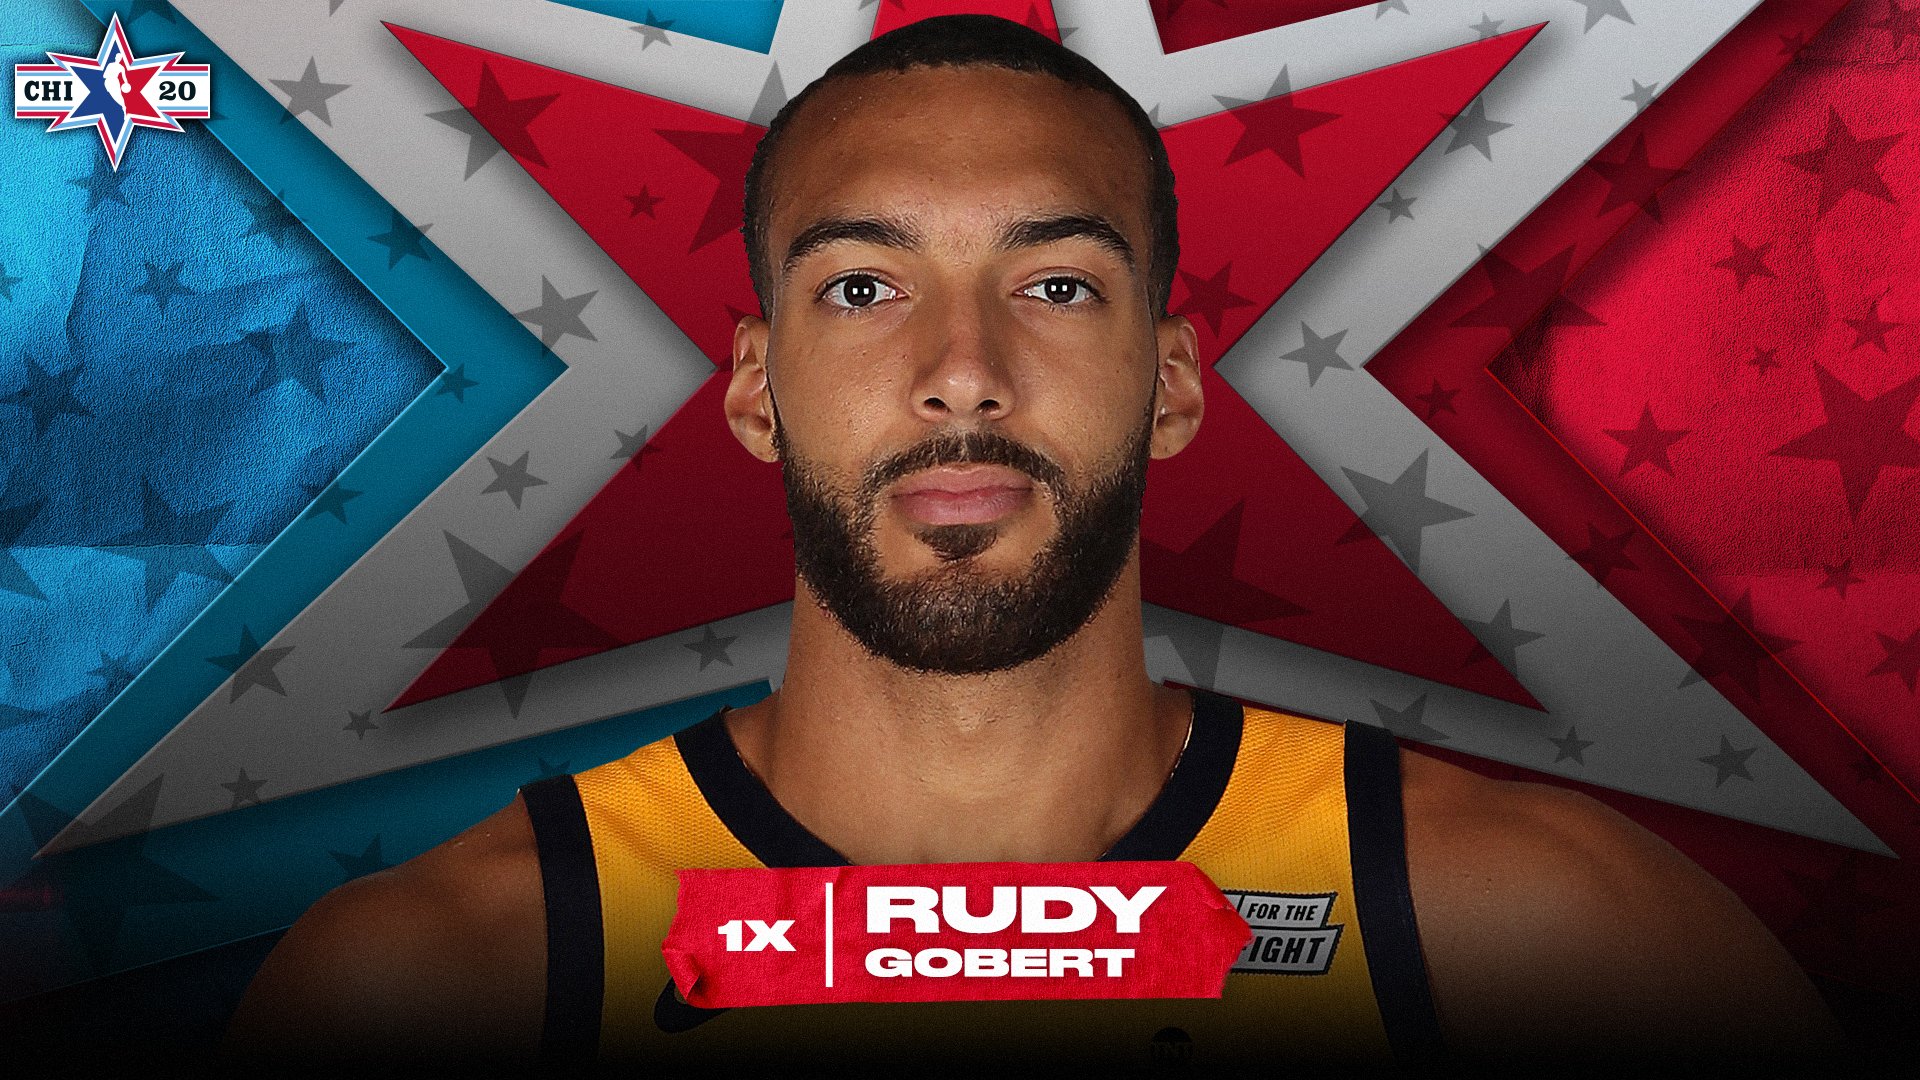 All-Star Game : Le basketteur guadeloupéen Rudy Gobert décroche enfin son ticket